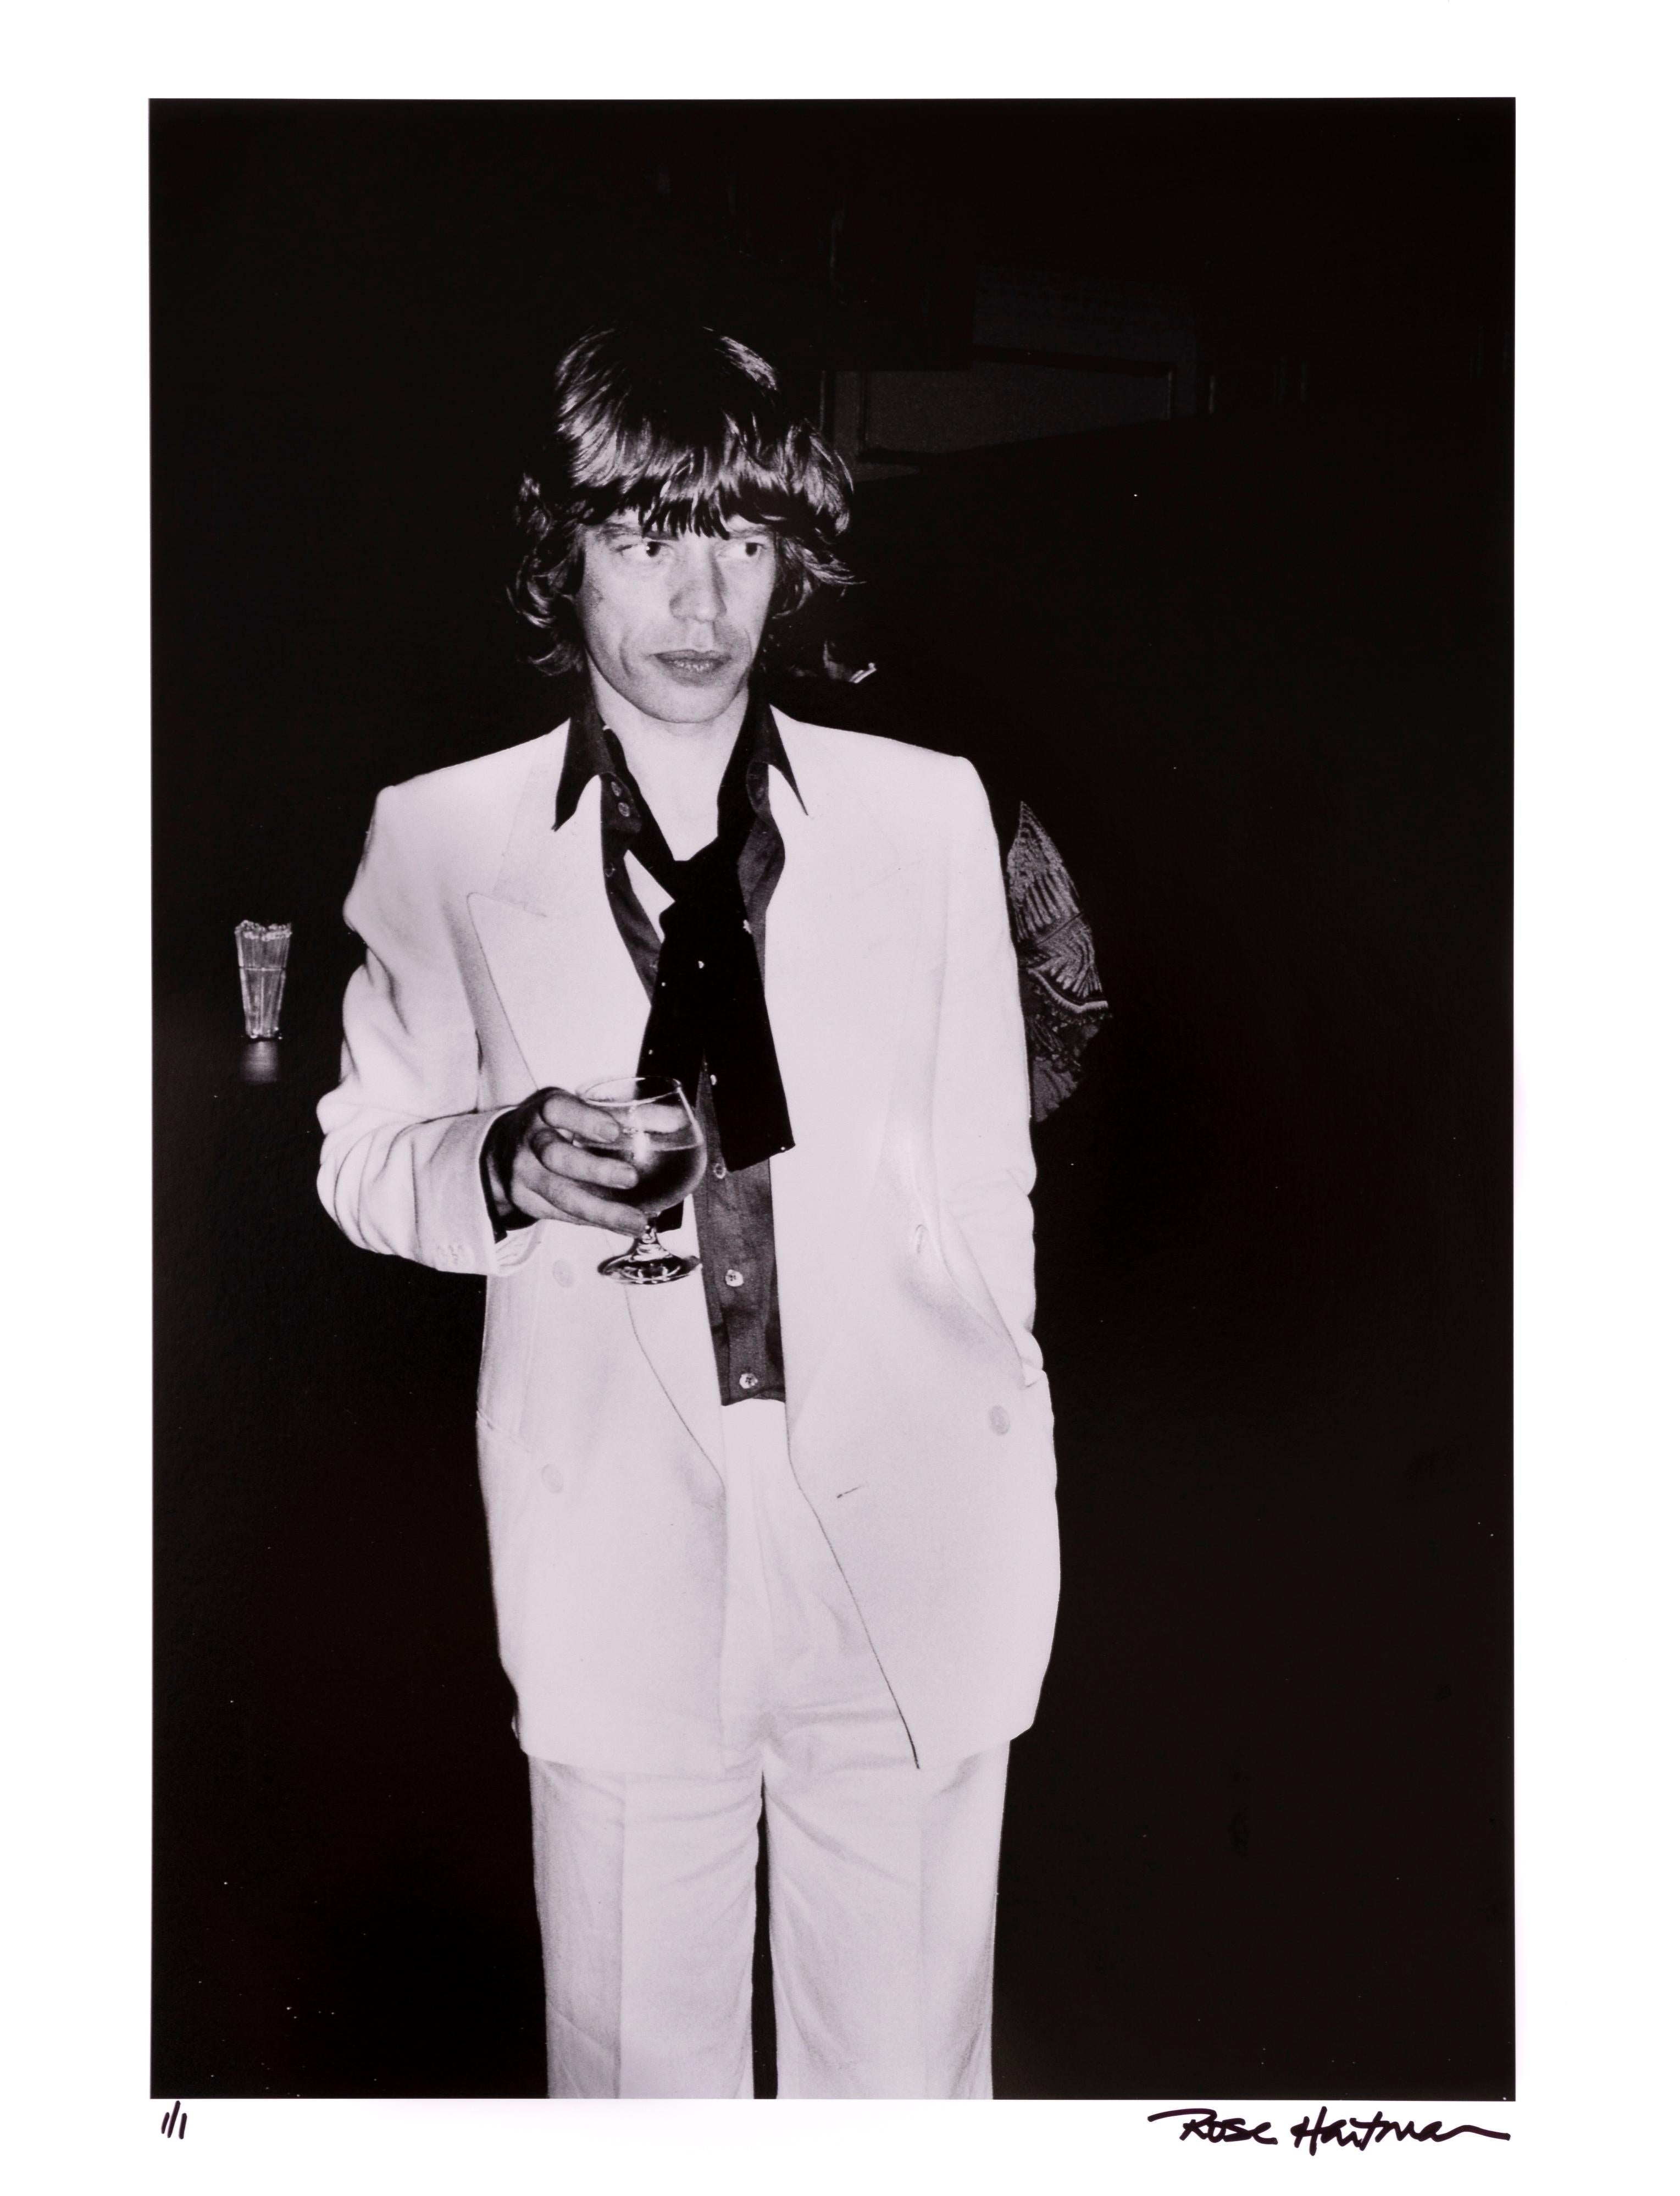 Rose Hartman Black and White Photograph - Mick Jagger Studio 54 - Vintage Print 1/1, Signed, black/white